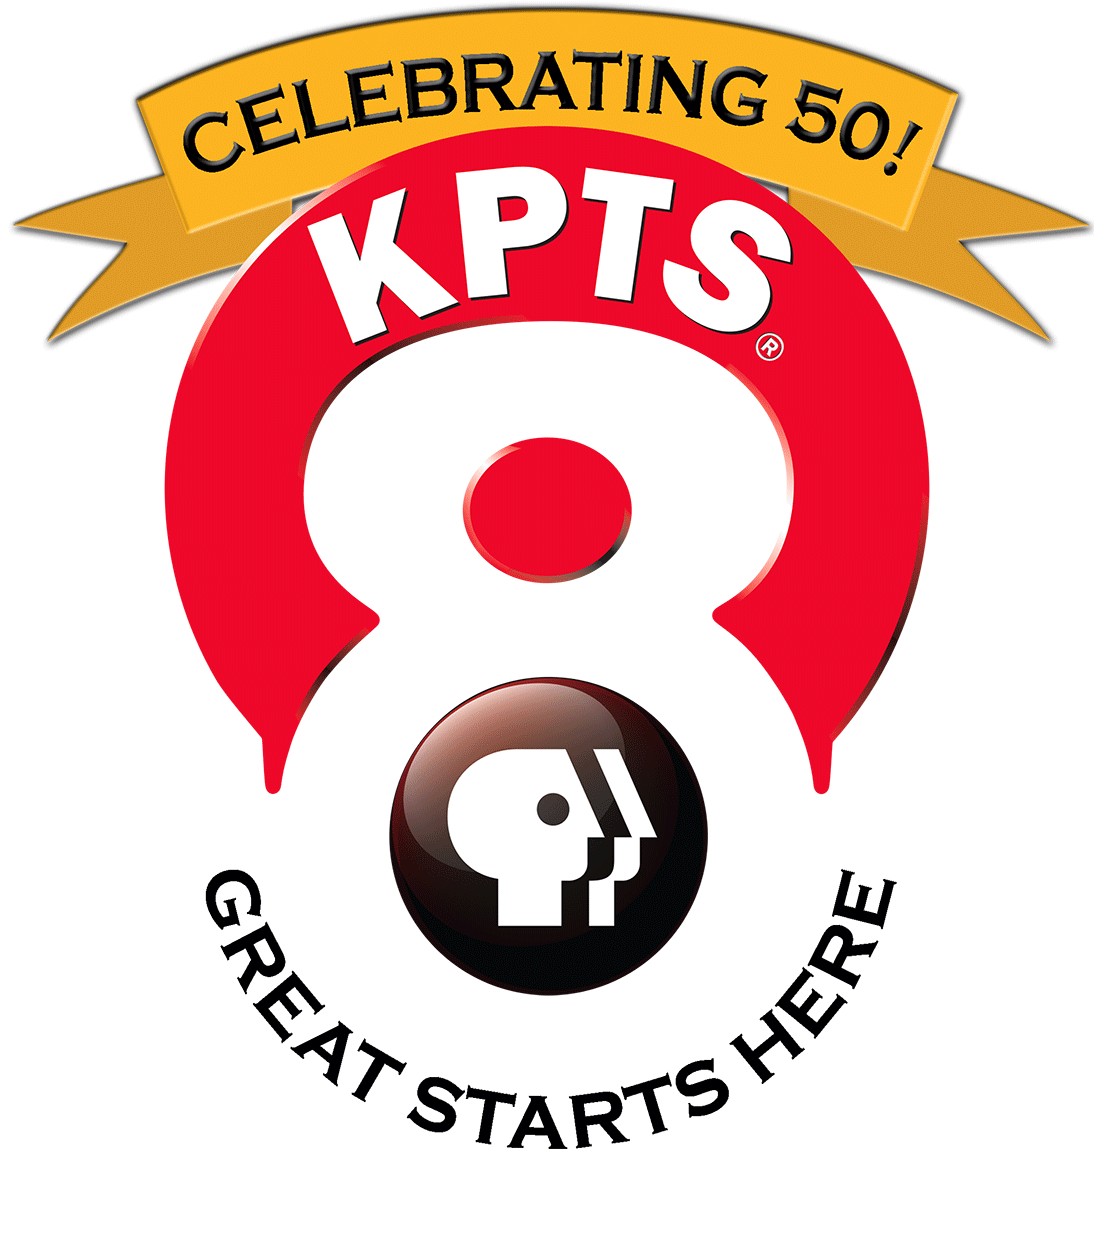 KPTS PBS Celebrating 50! Logo